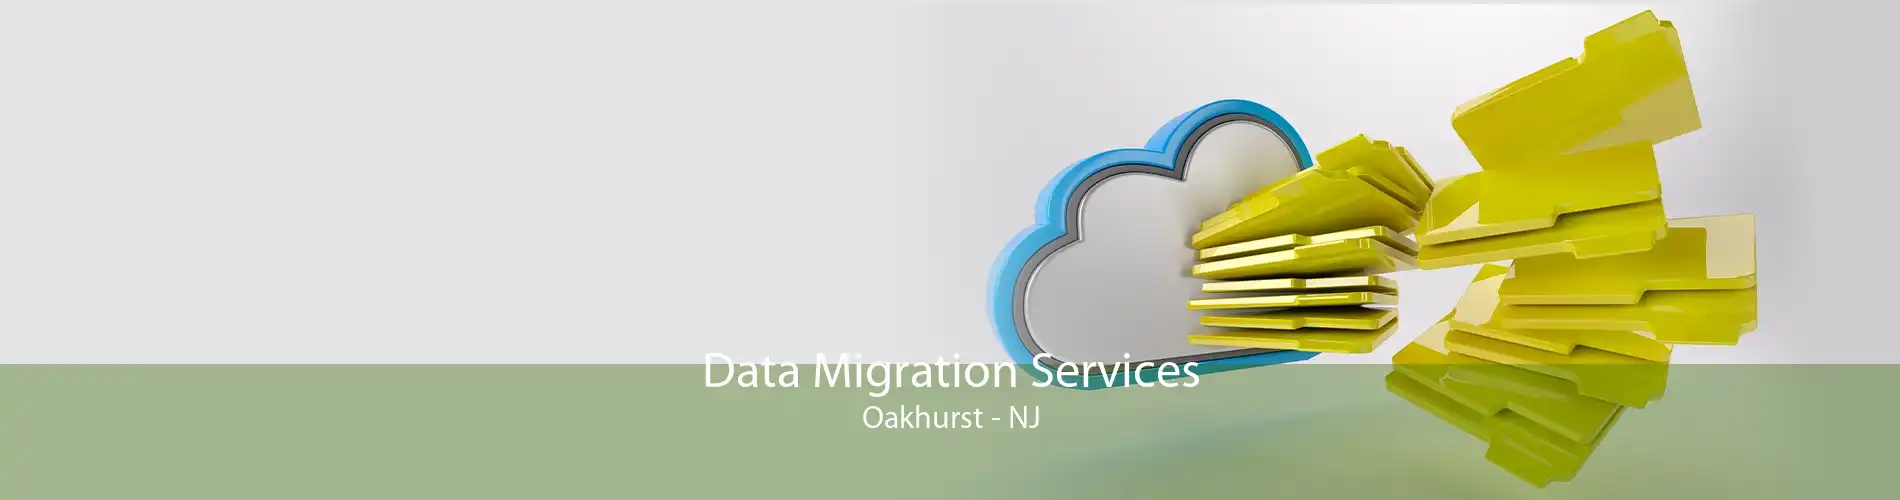 Data Migration Services Oakhurst - NJ